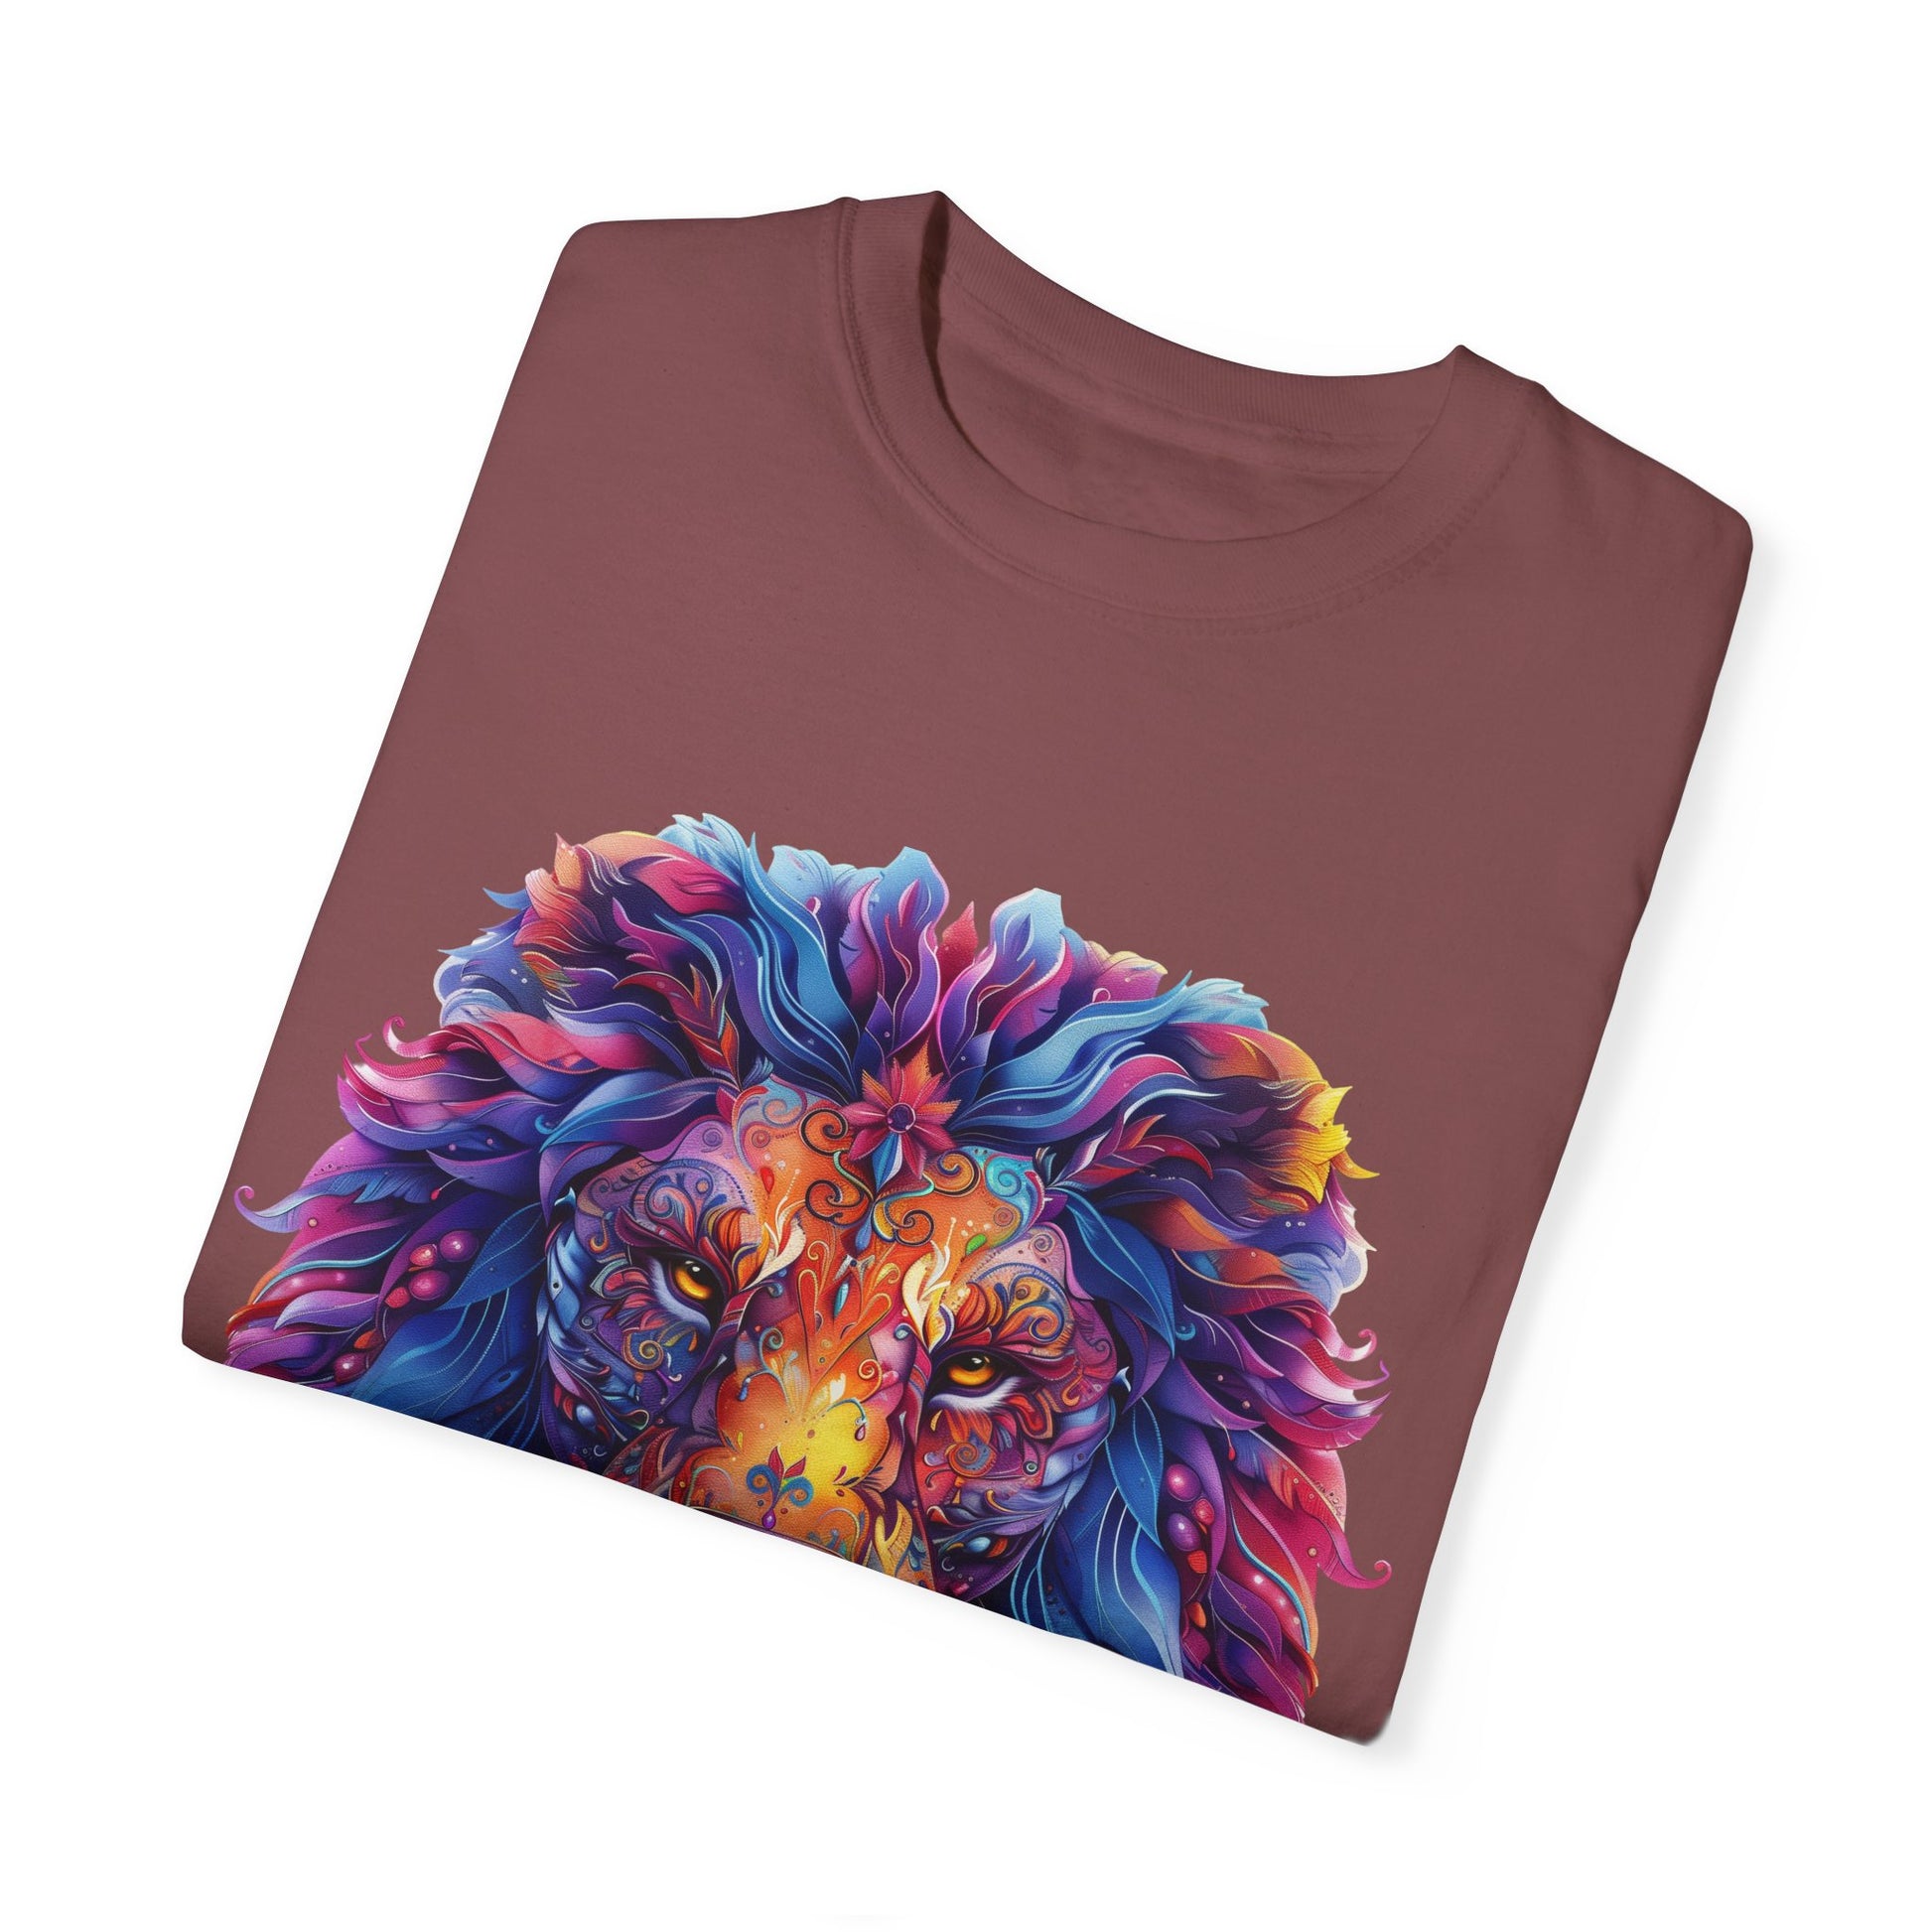 Lion Head Cool Graphic Design Novelty Unisex Garment-dyed T-shirt Cotton Funny Humorous Graphic Soft Premium Unisex Men Women Brick T-shirt Birthday Gift-29